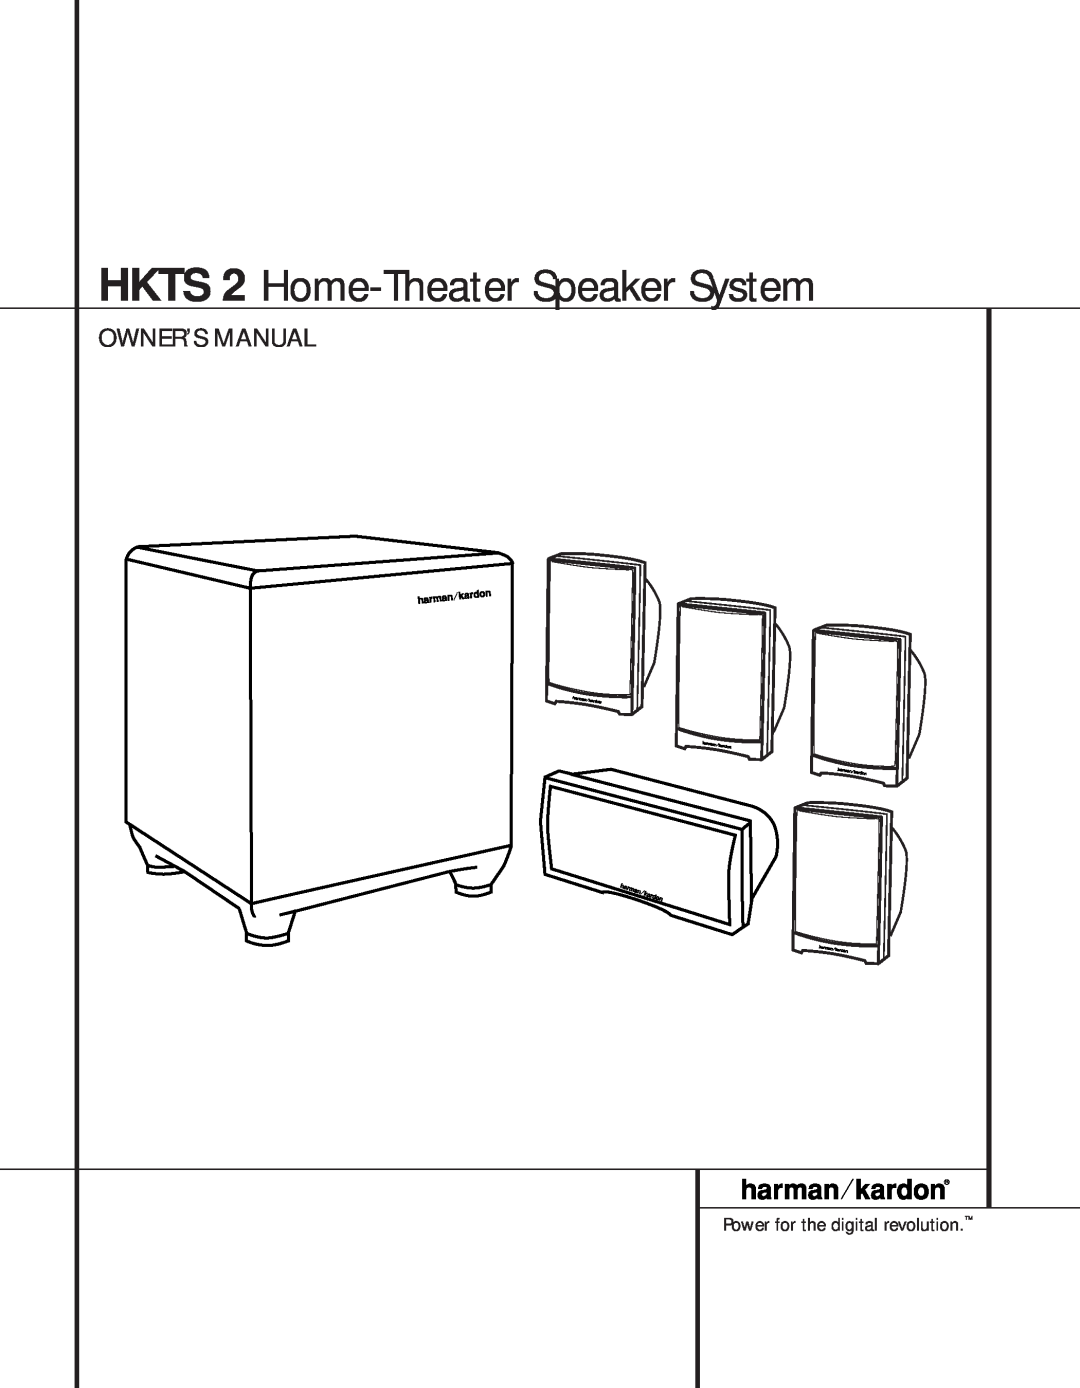 Harman-Kardon Home Theater System, 201 specifications HKTS 2 Home-TheaterSpeaker System, Power for the digital revolution 